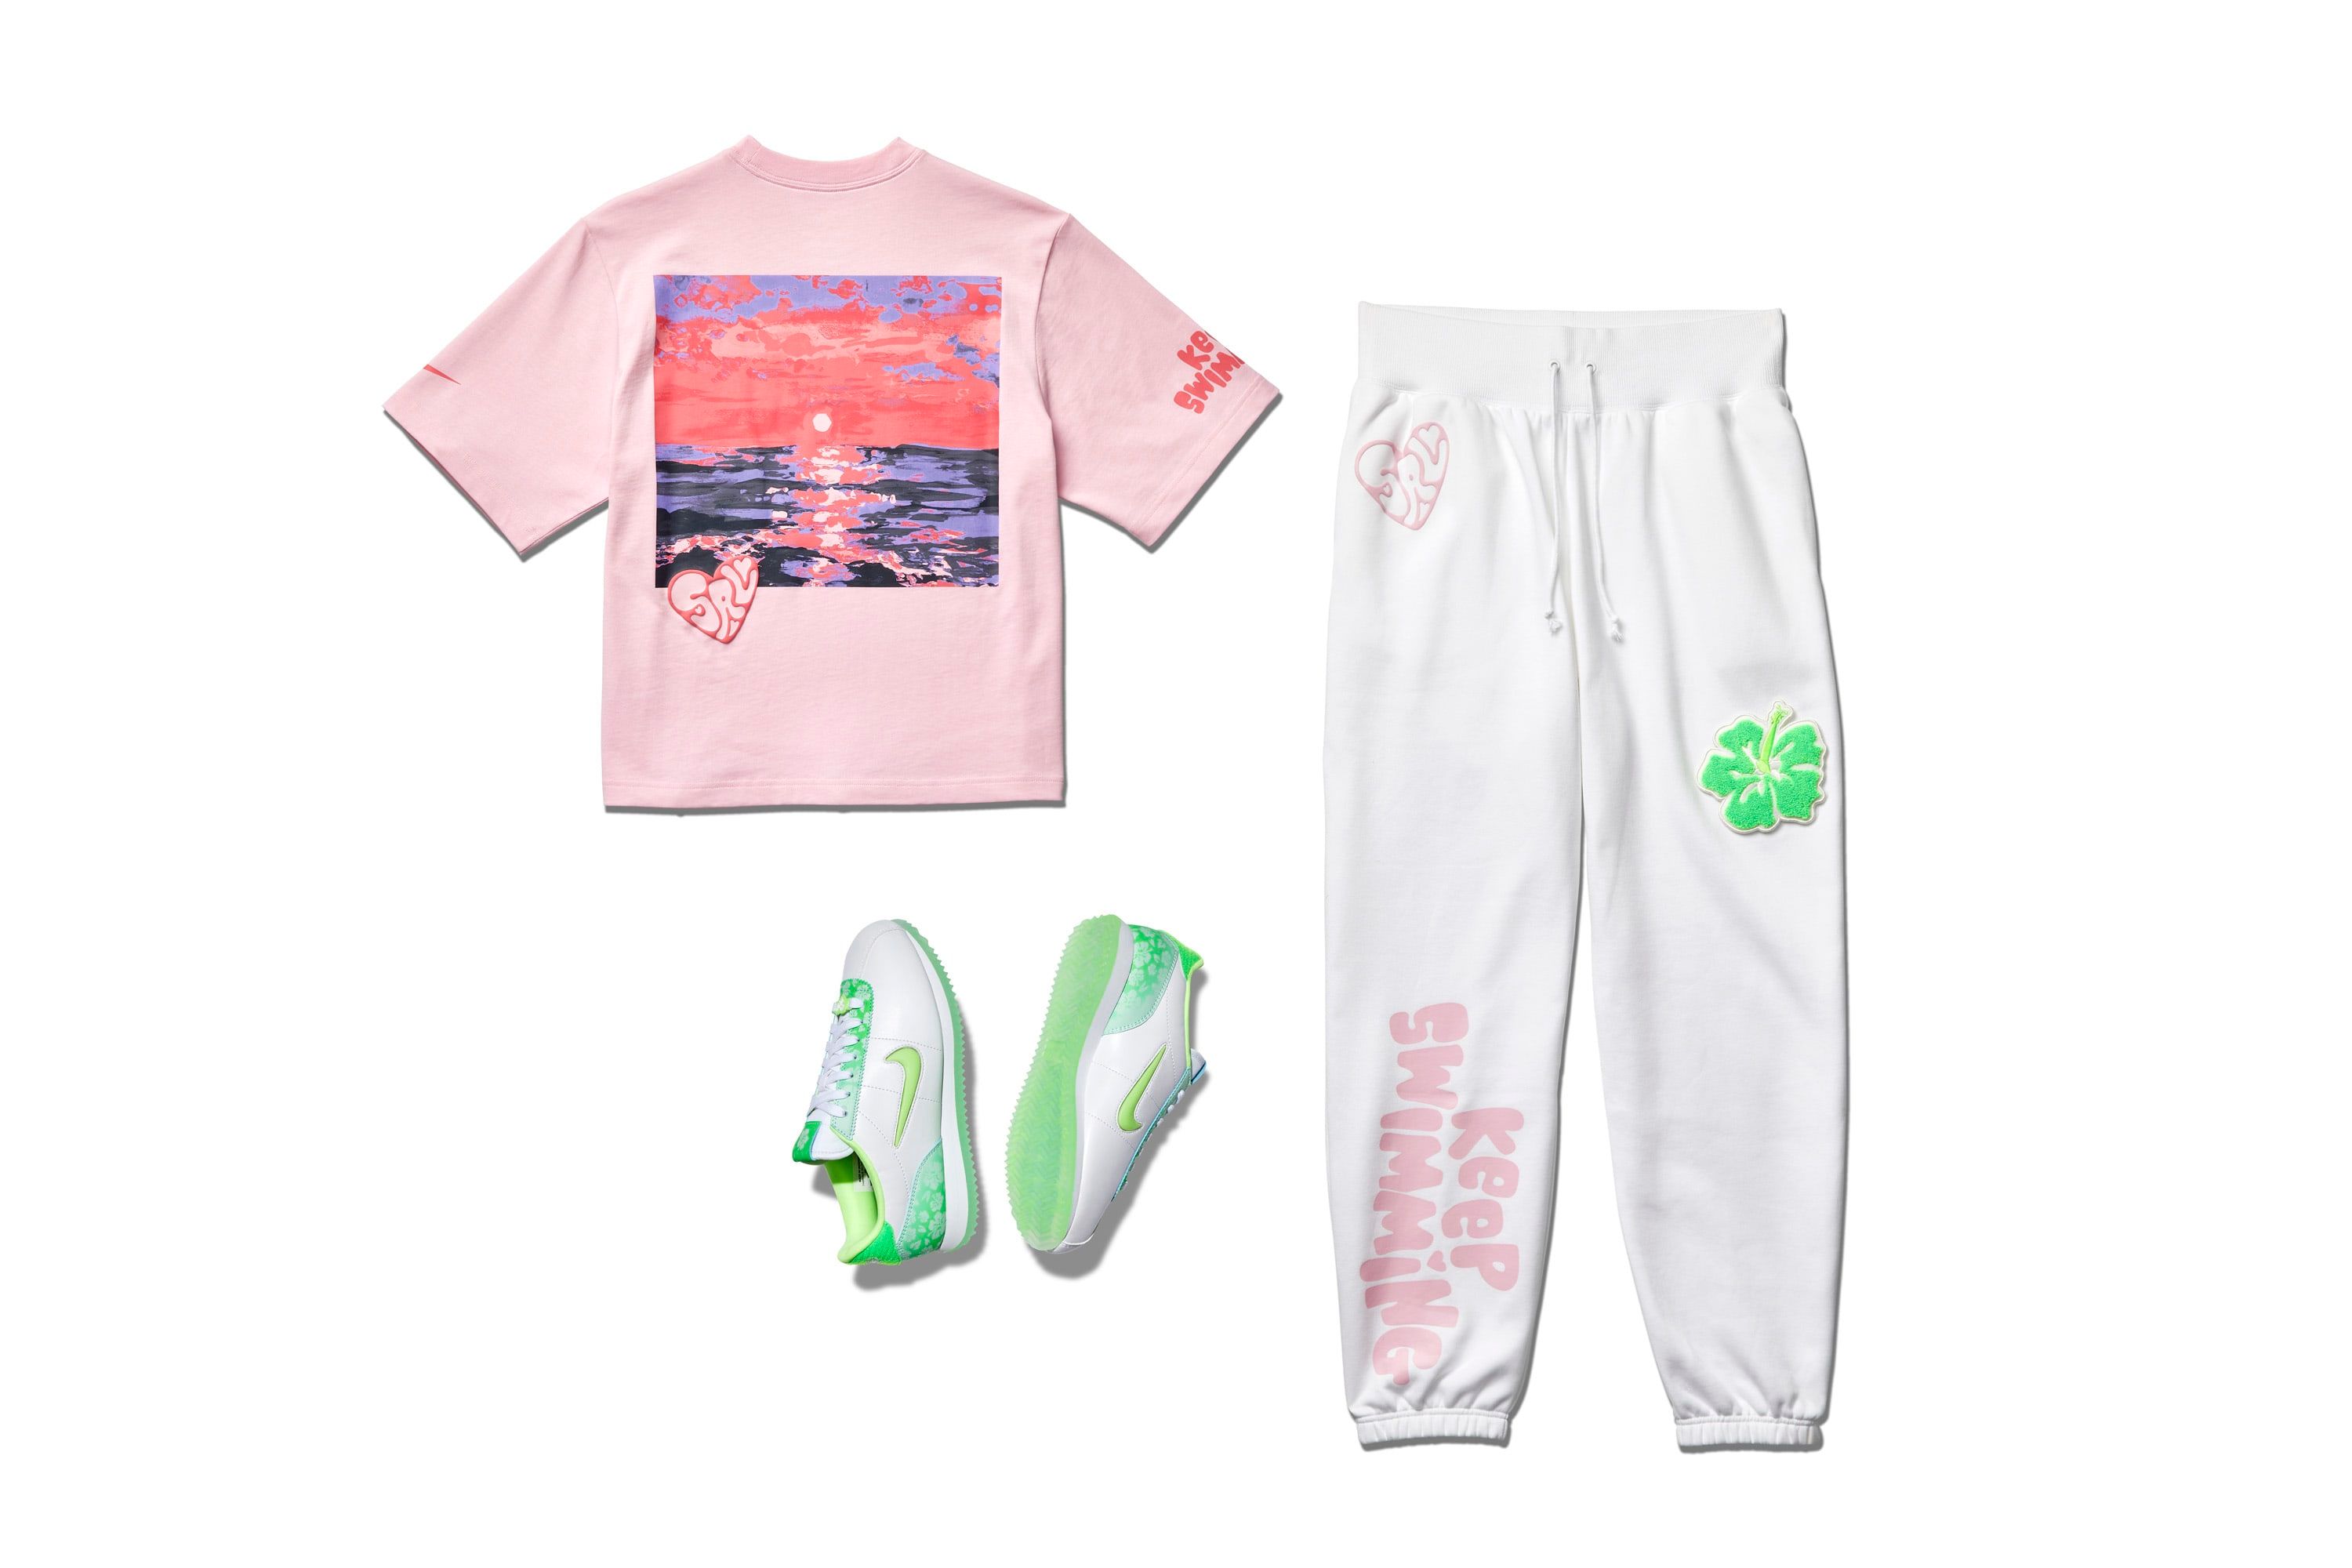 Sydney Little x Nike Cortez “Doernbecher XIX” 2023